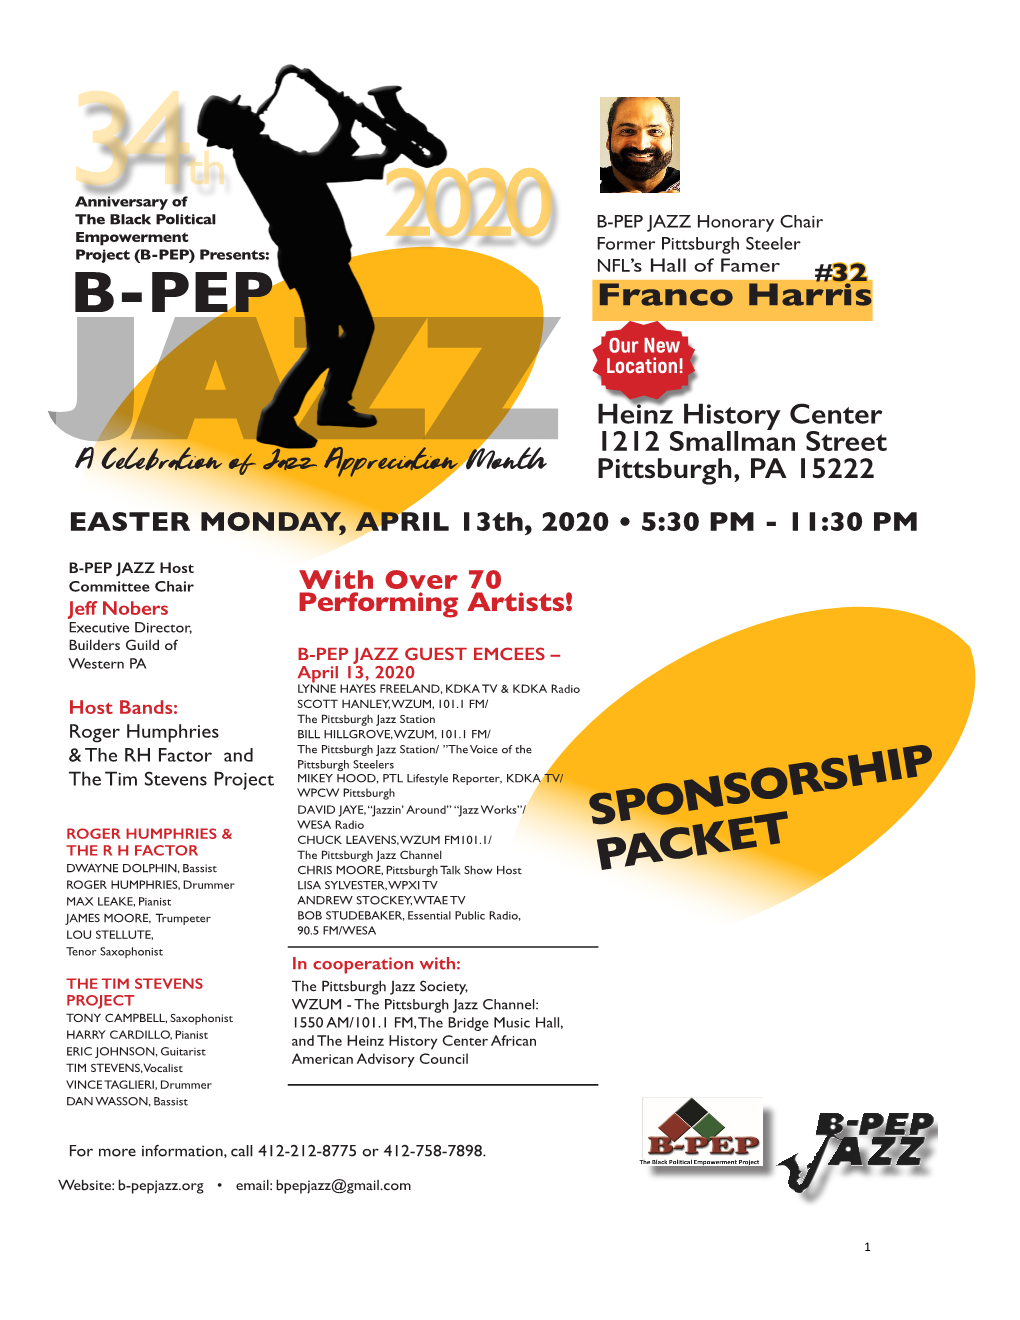 B-PEP JAZZ Sponsorship Package for April 13, 2020